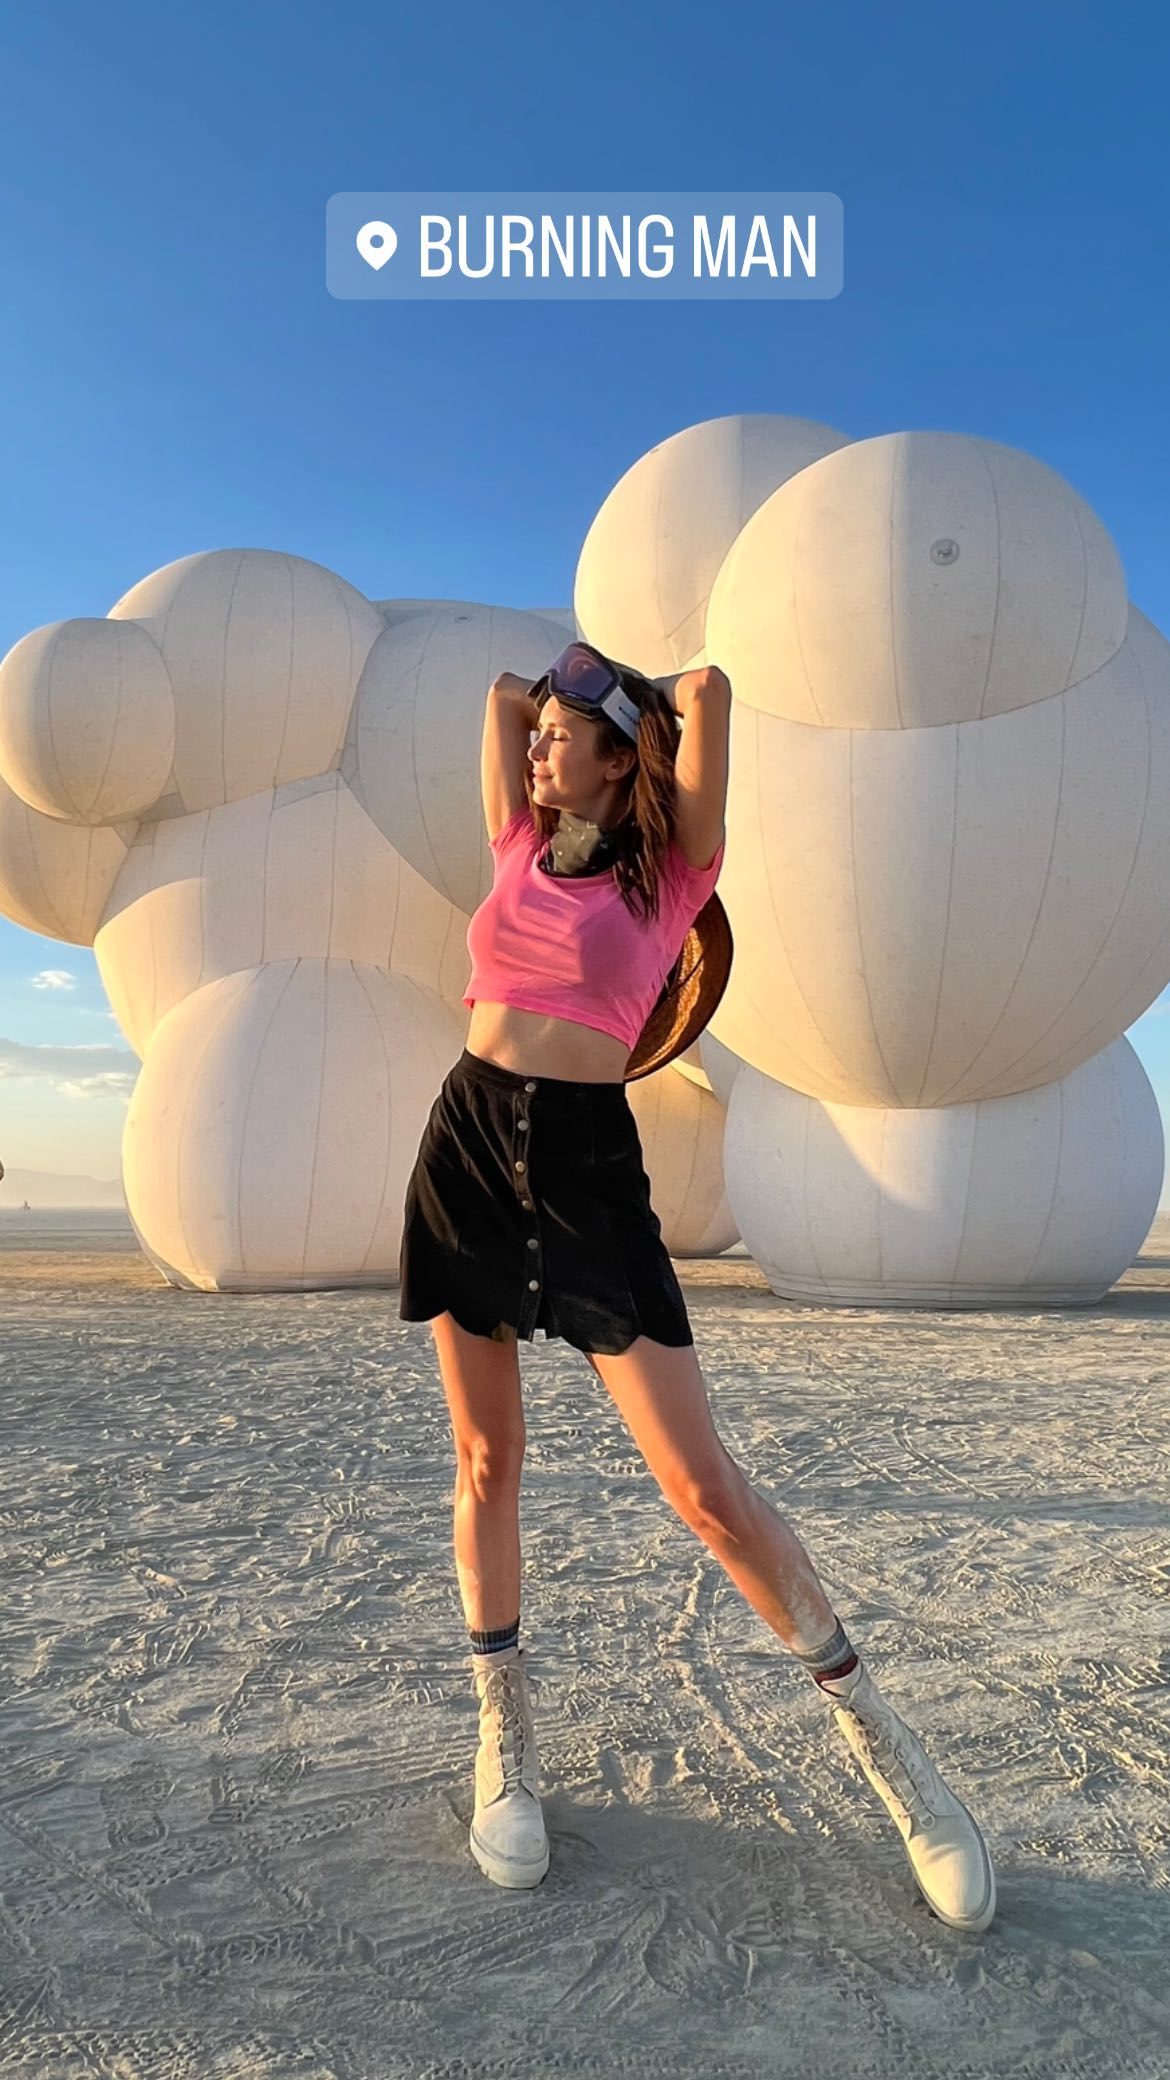 Photos n°3 : Nina Dobrev Kicks Up the Dust at Burning Man!